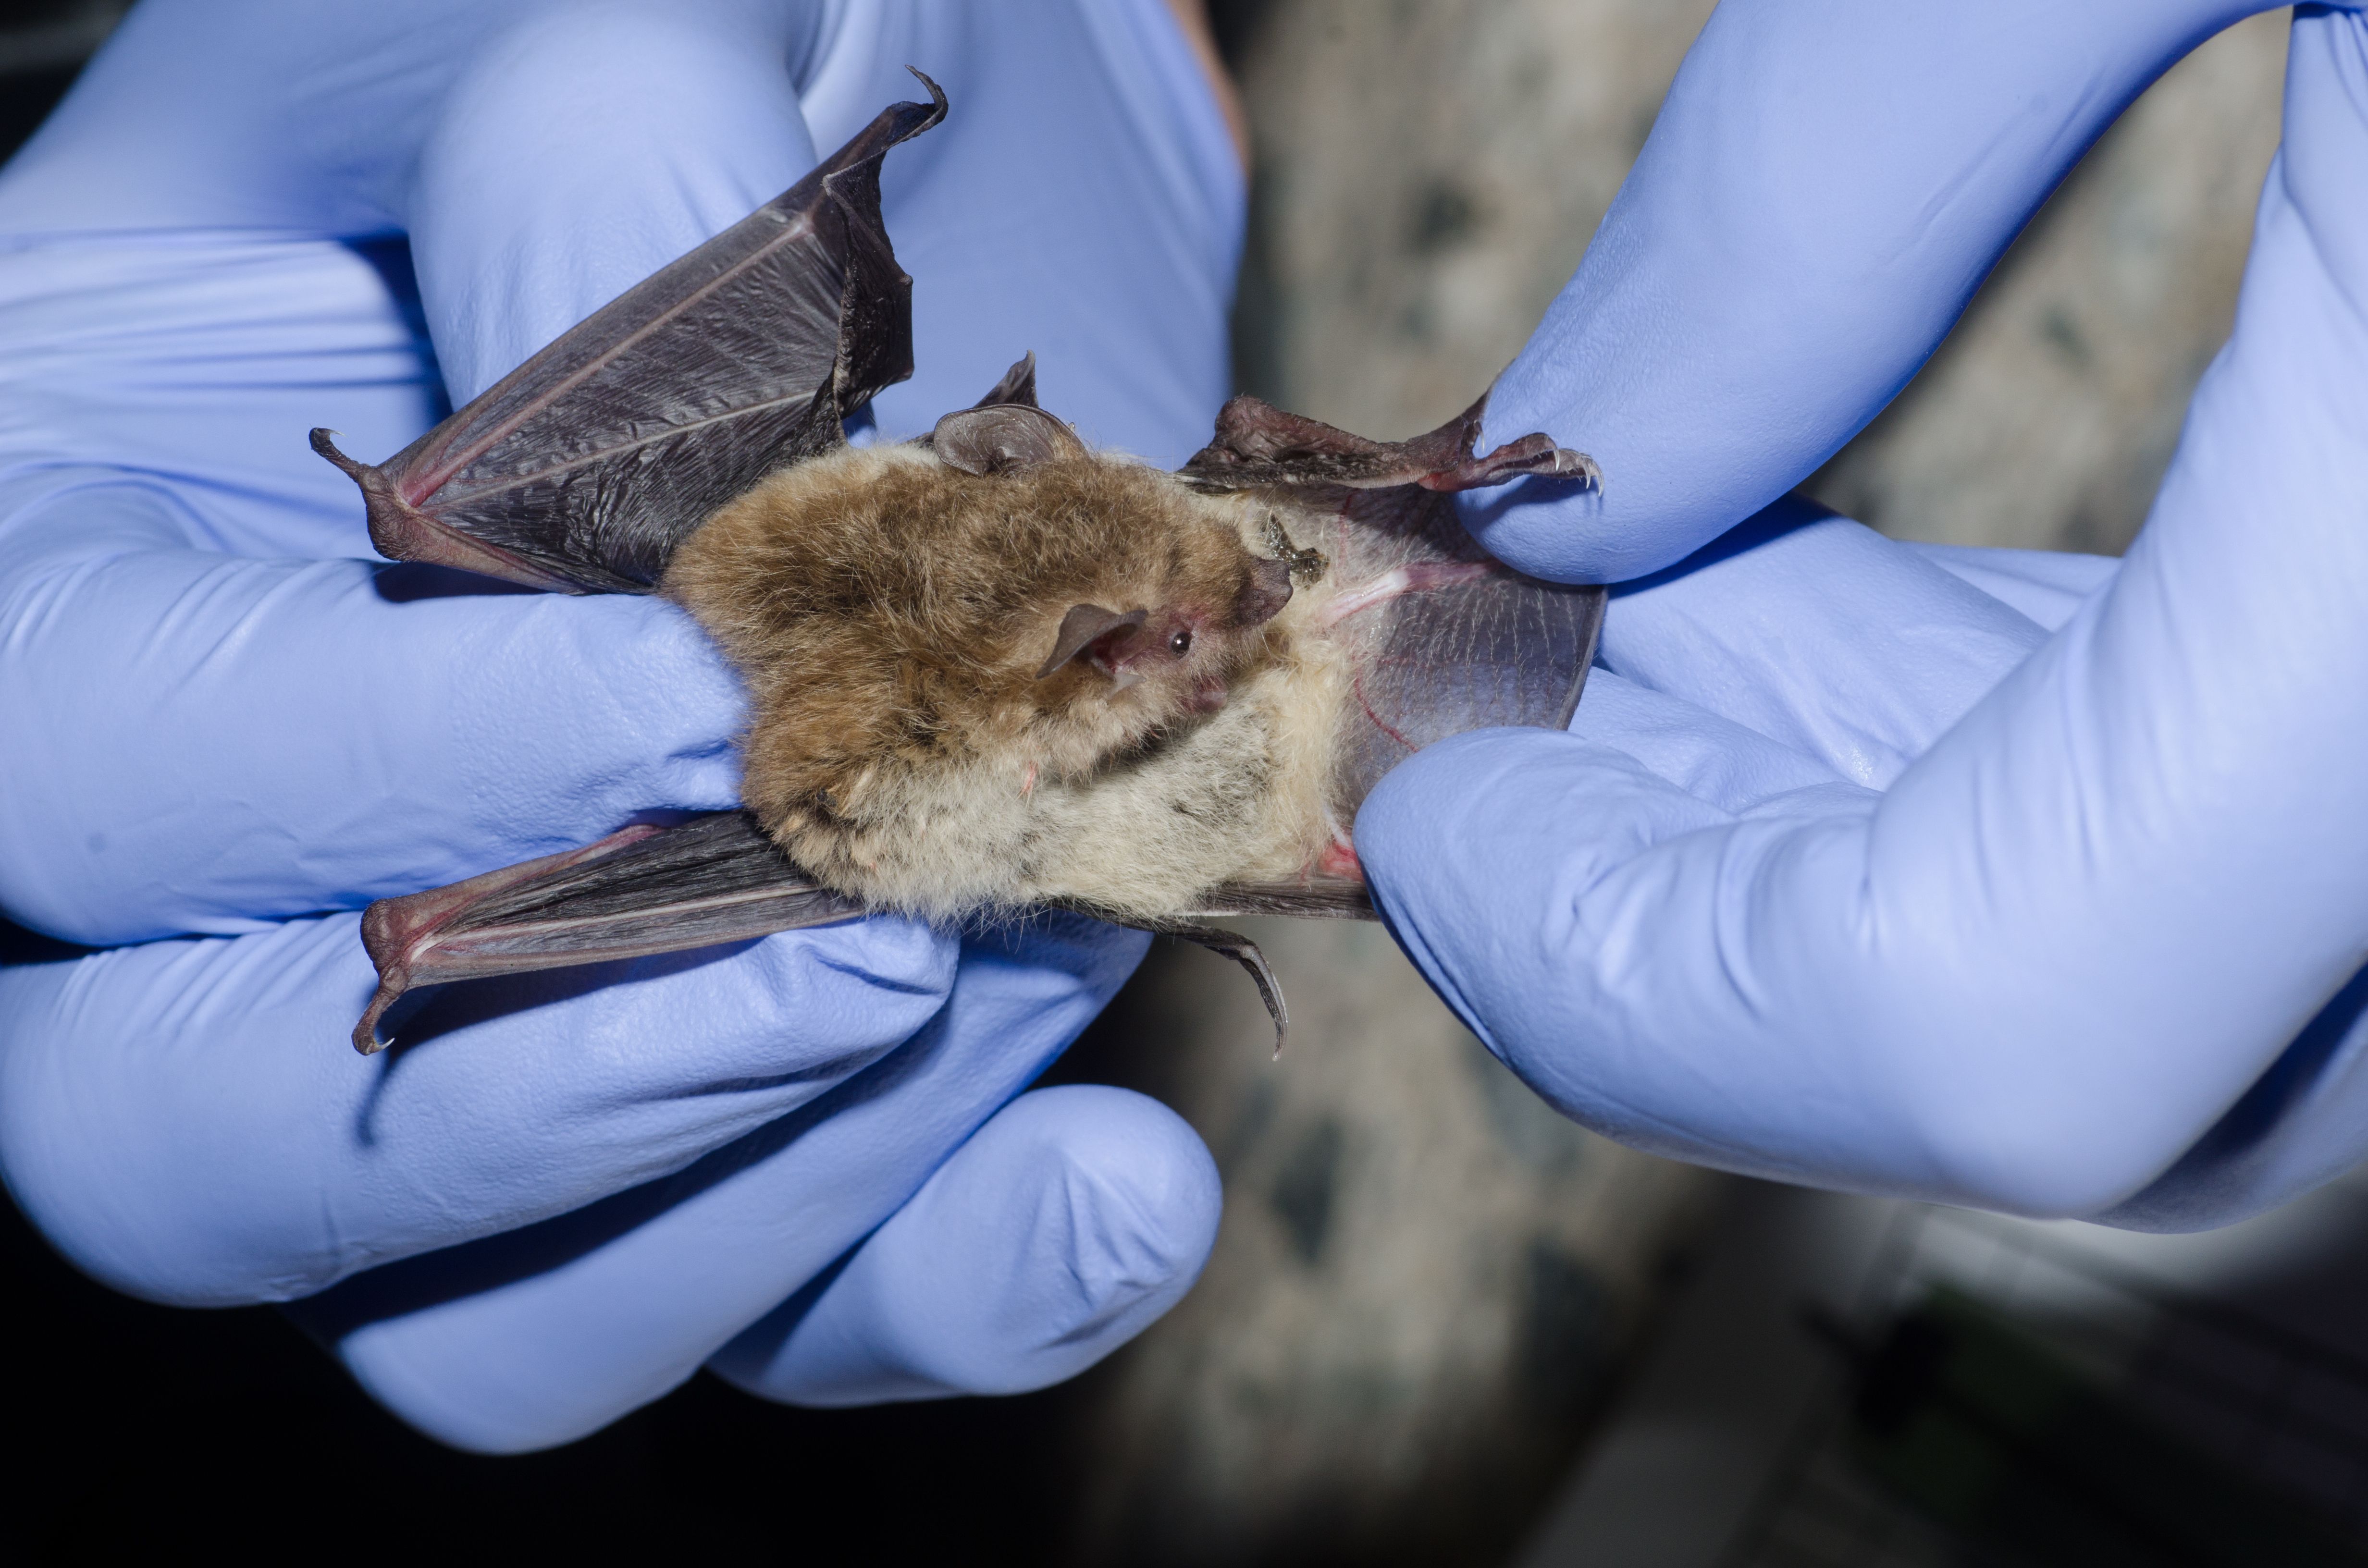 A wildlife biologist taking data on a bat caught in a mist net. Image courtesy Shutterstock.